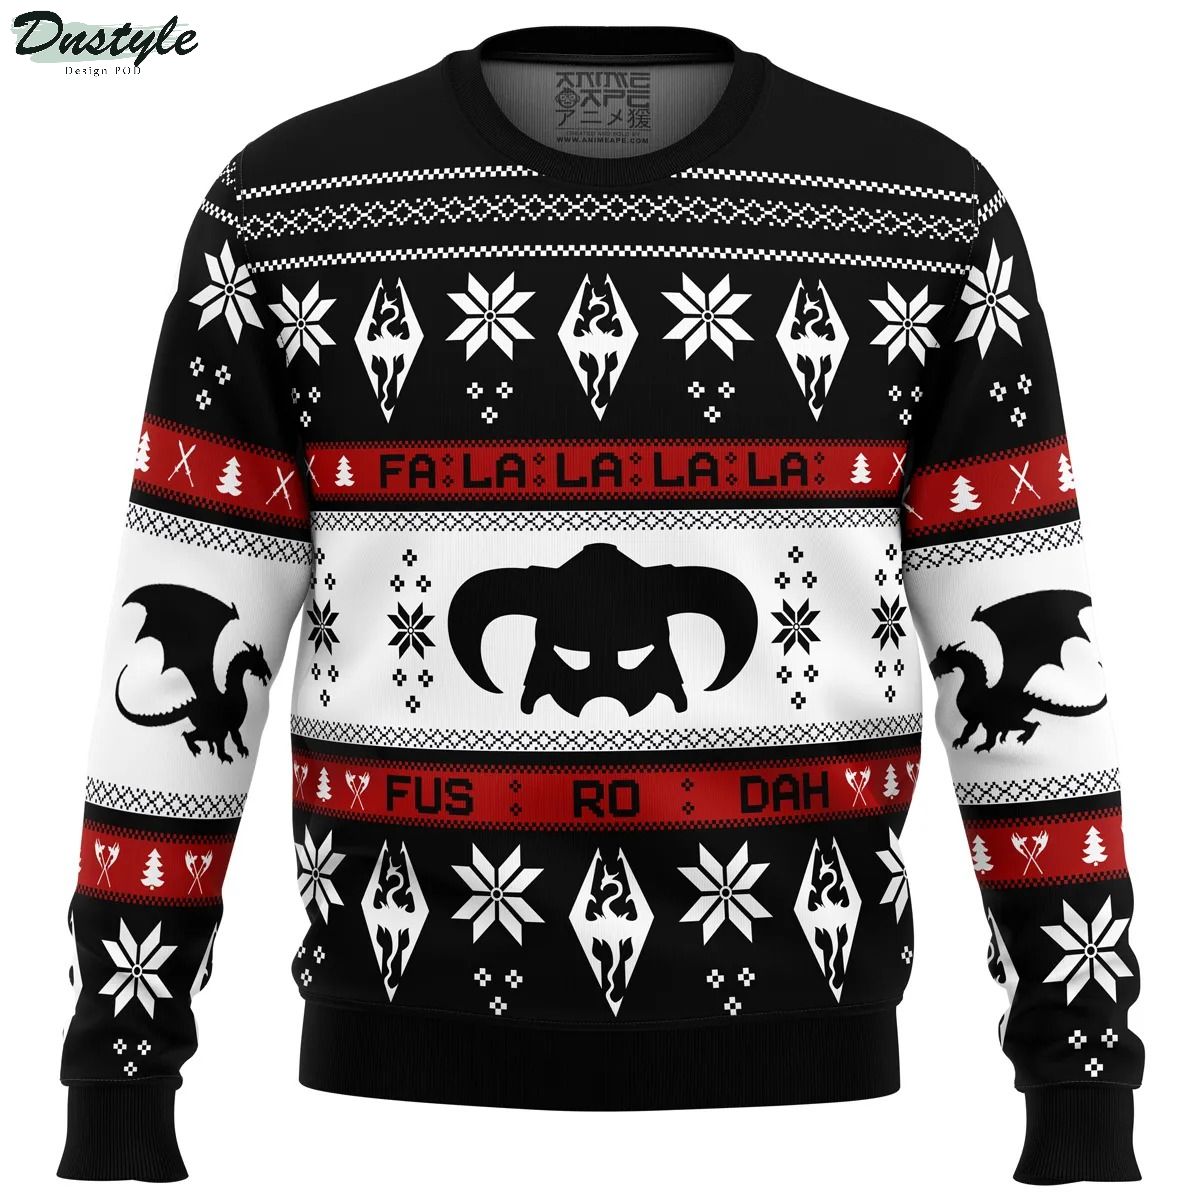 Skyrim Fusrodah Fa La La La La Ugly Christmas Sweater